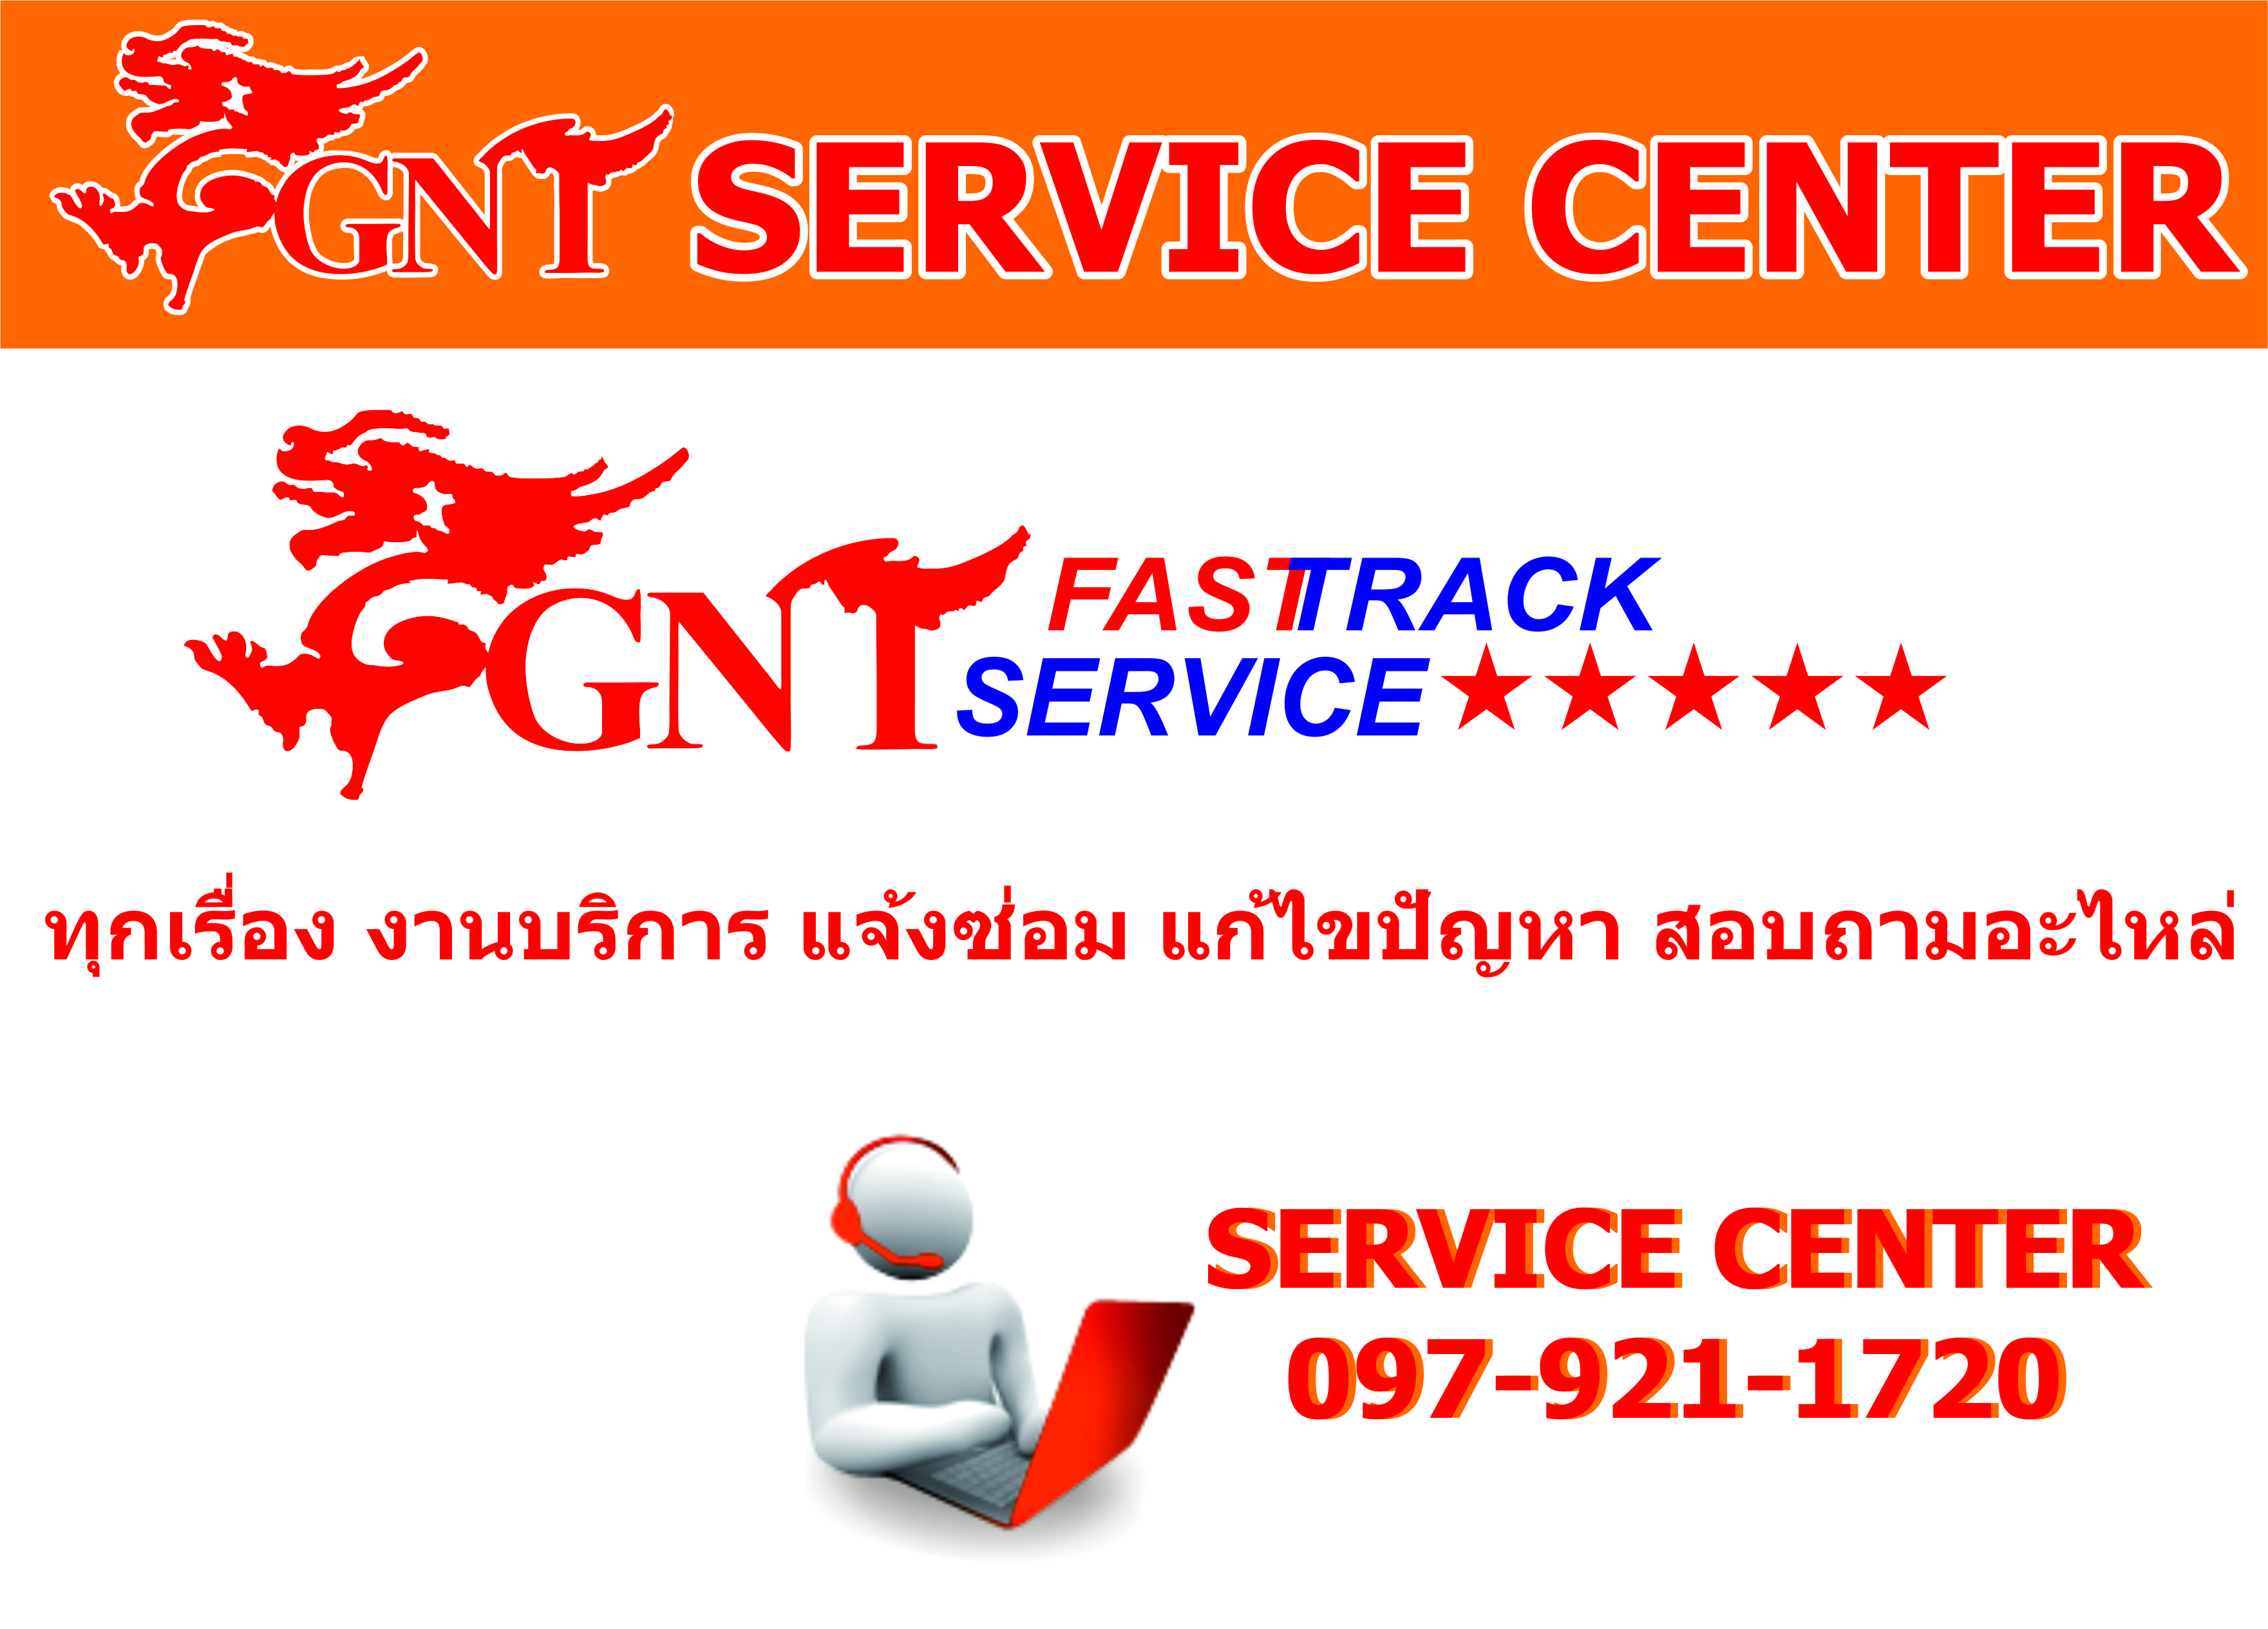 FAST TRACK SERVICE